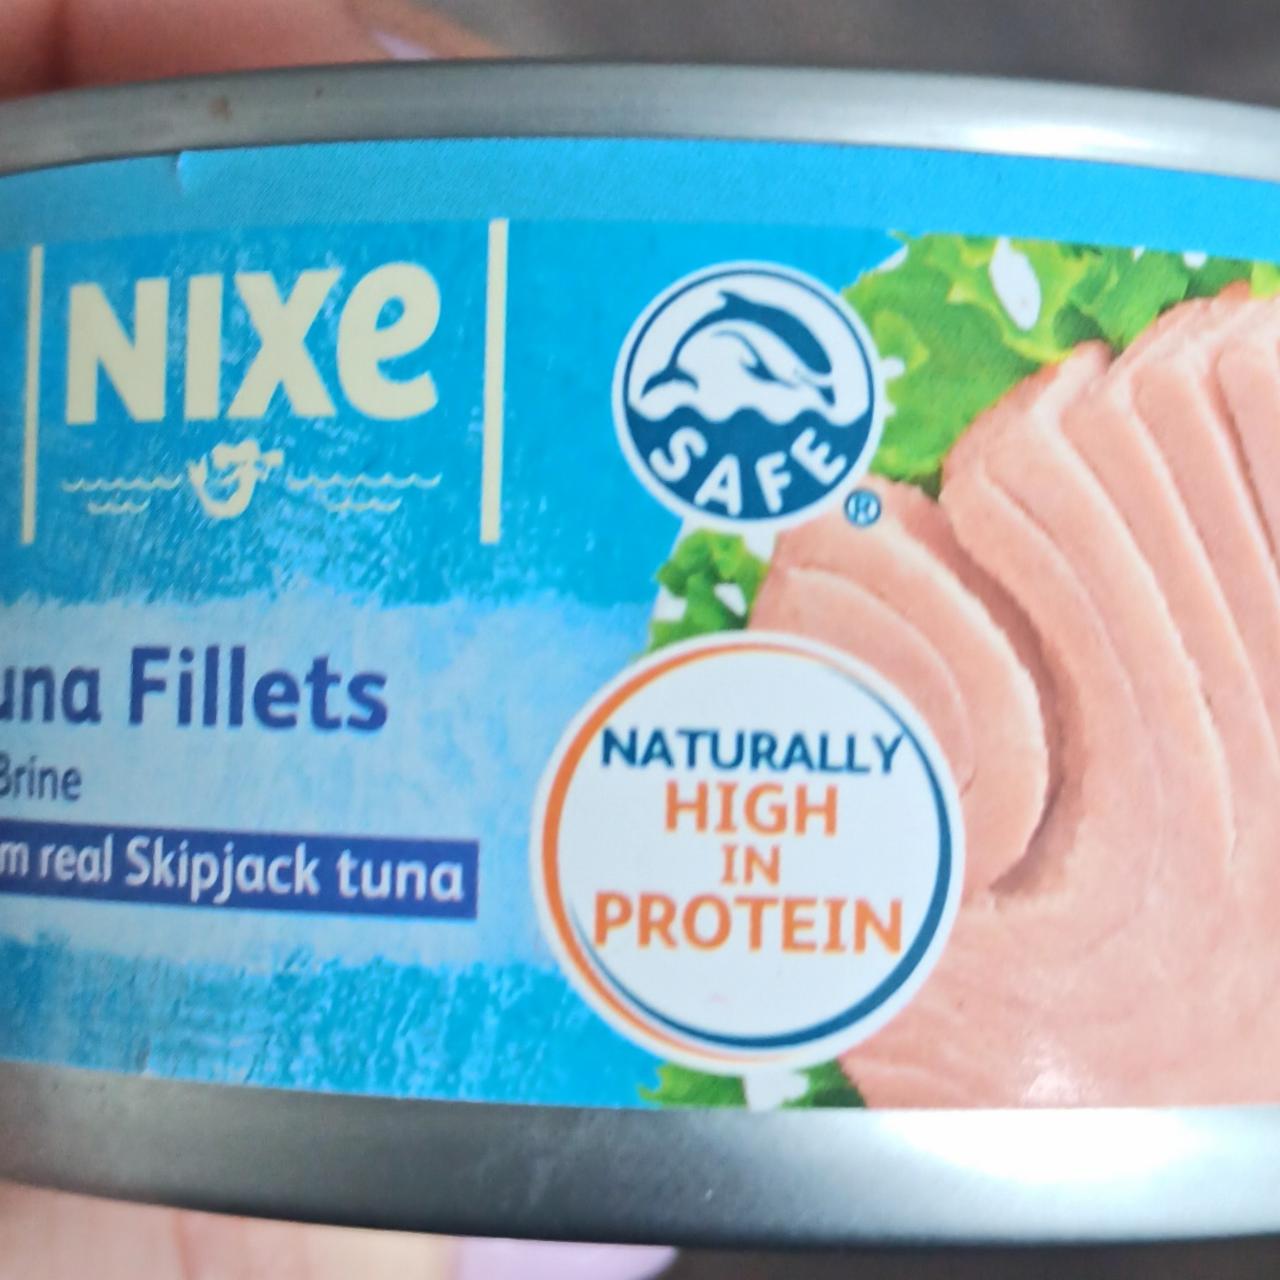 Fotografie - Tuna fillets in Brine from Skipjack Tuna Nixe